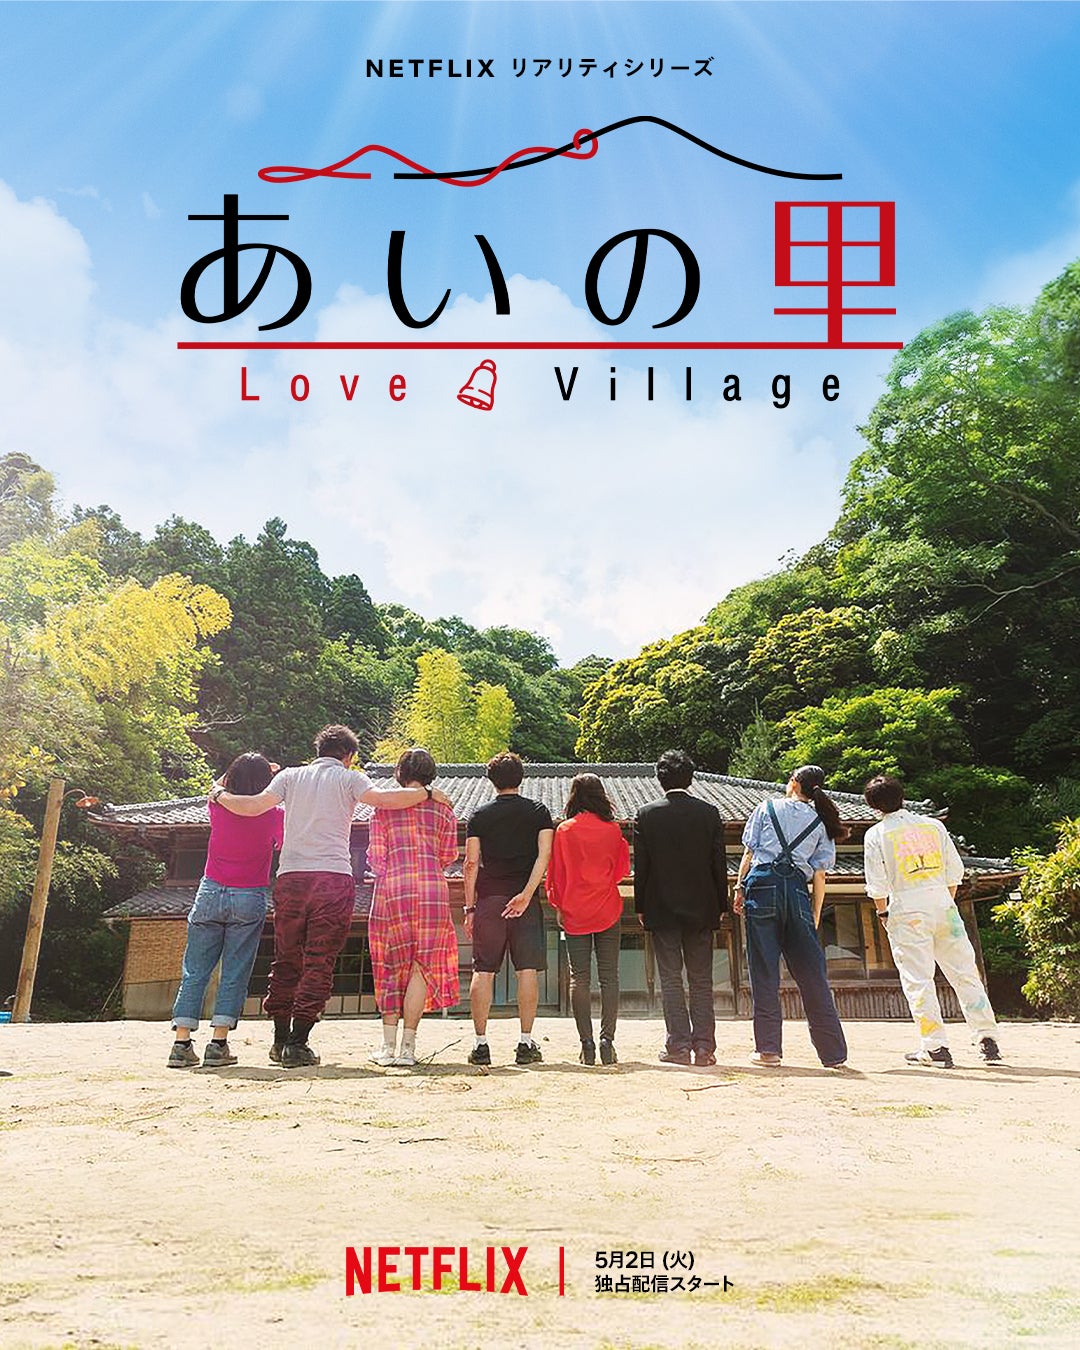 TV ratings for Love Village (あいの里) in Brazil. Netflix TV series